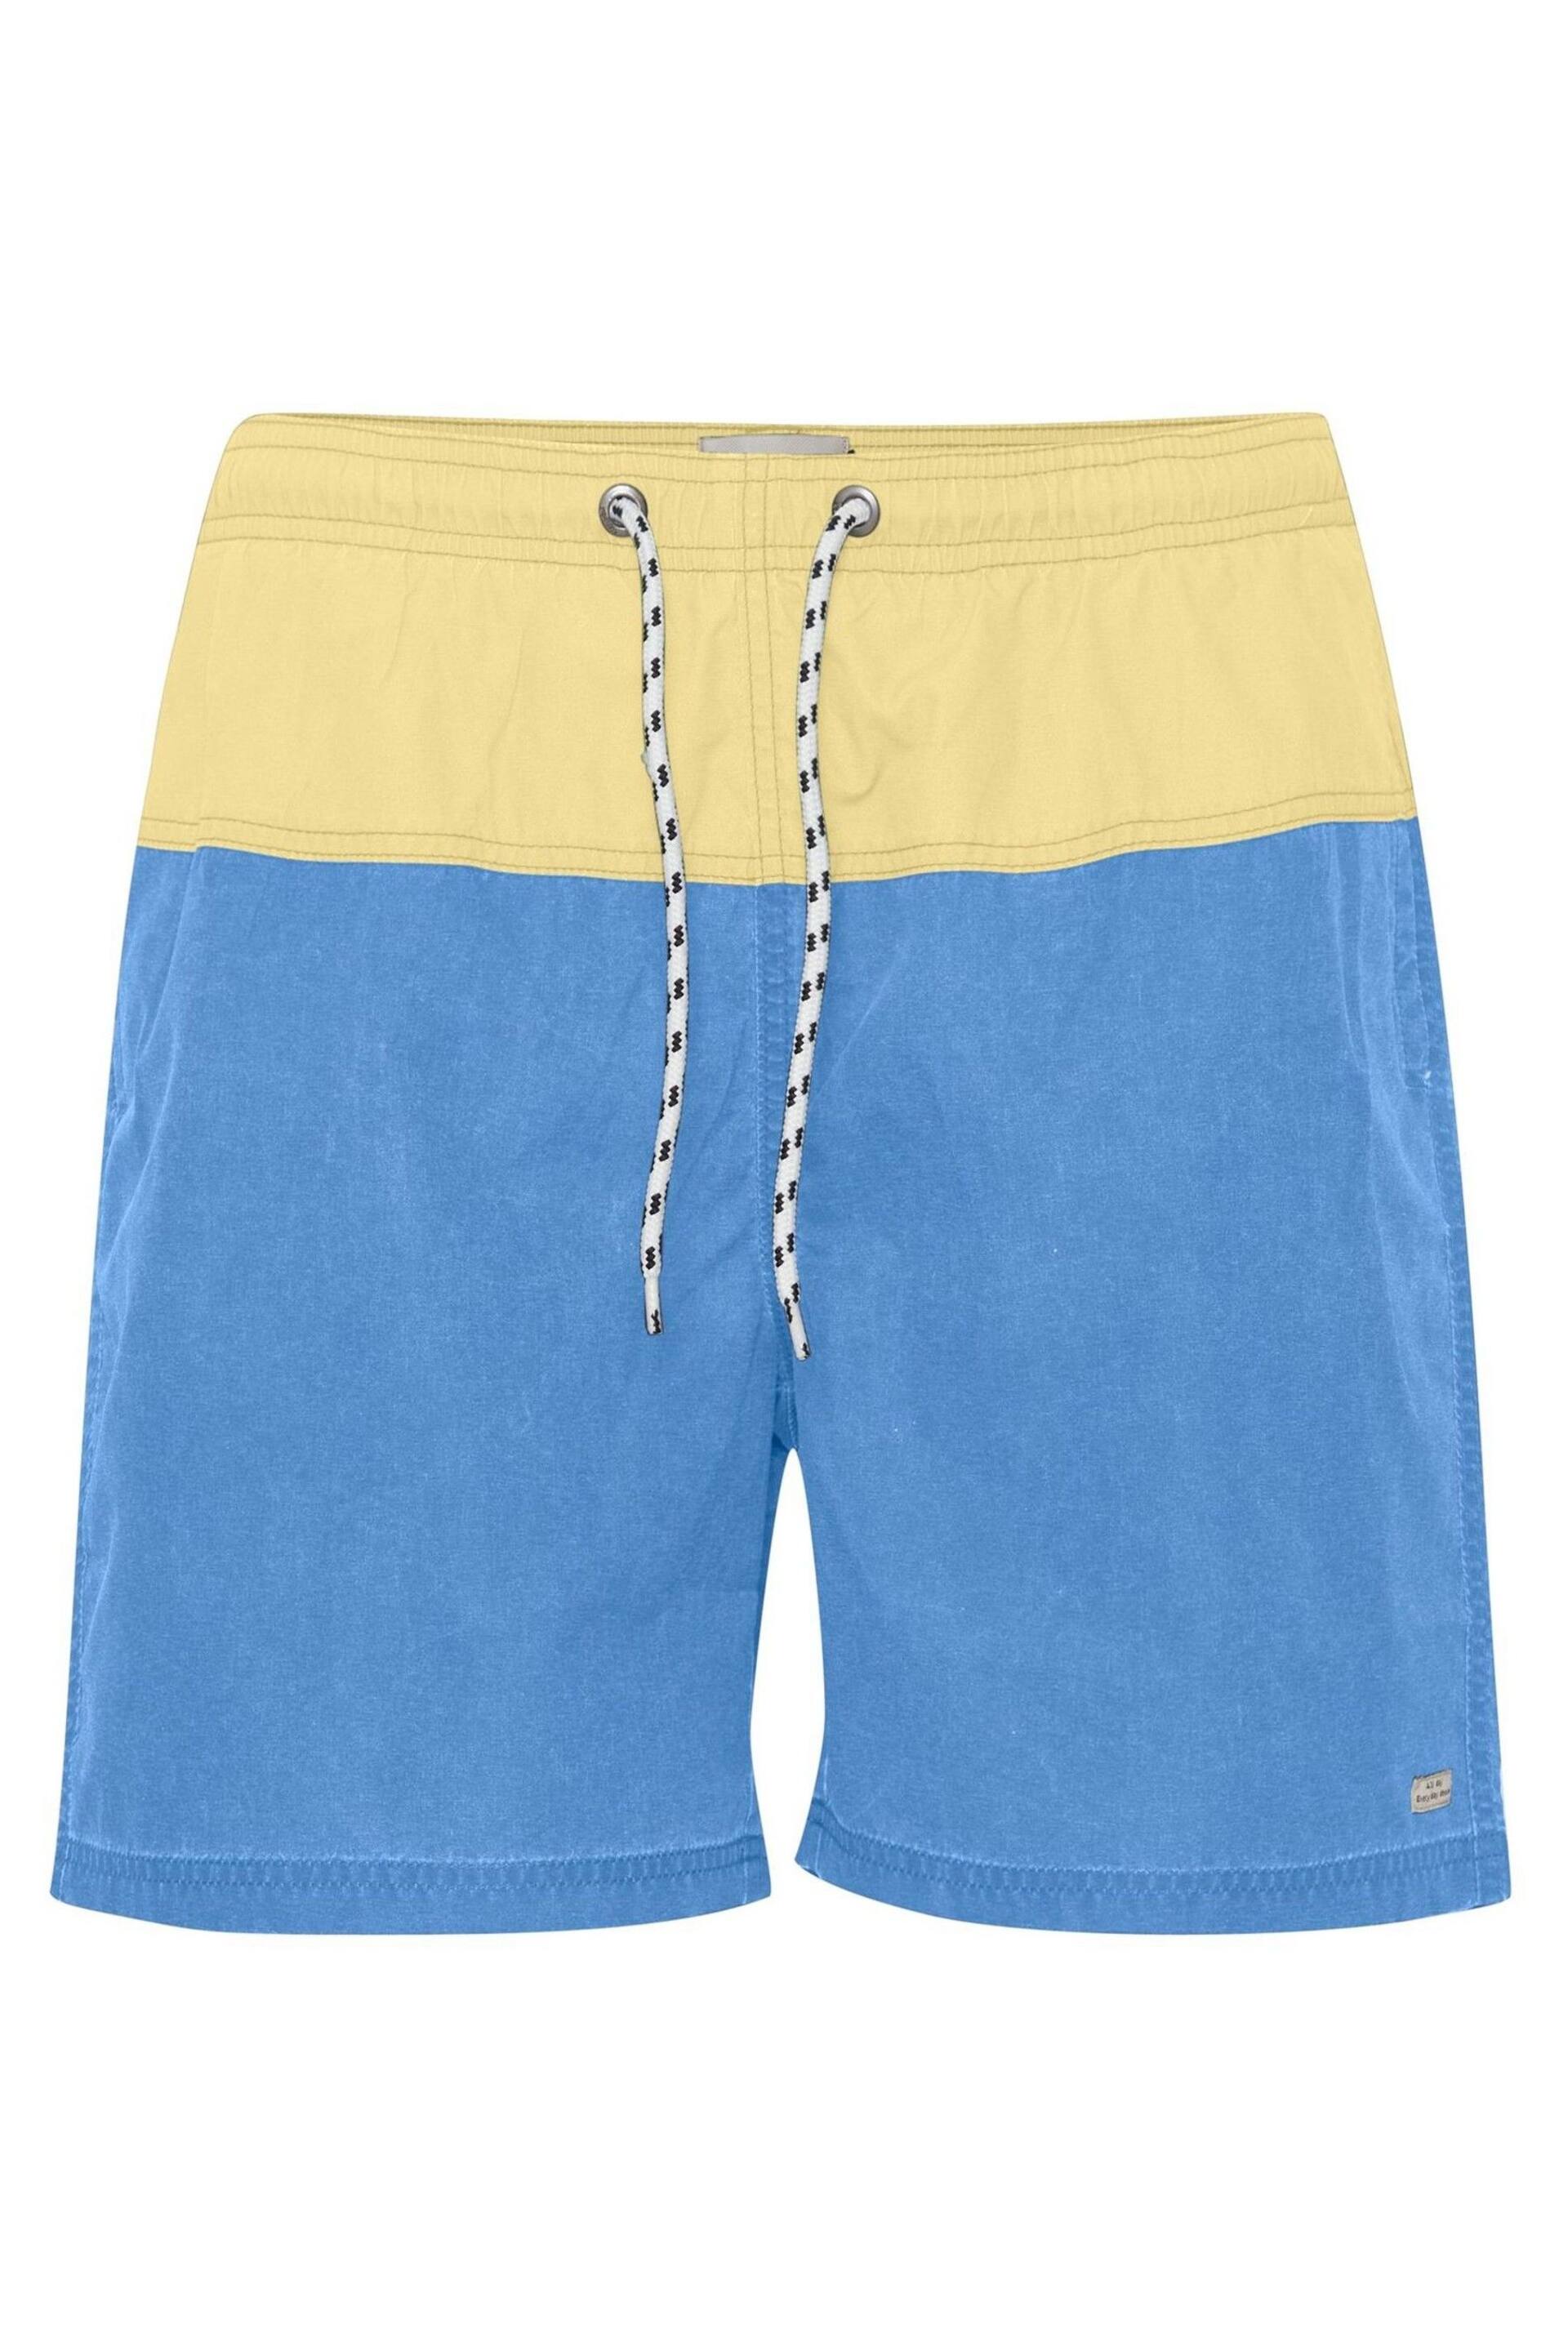 Blend Blue Retro 2 Colour Swimming Shorts - Image 4 of 4